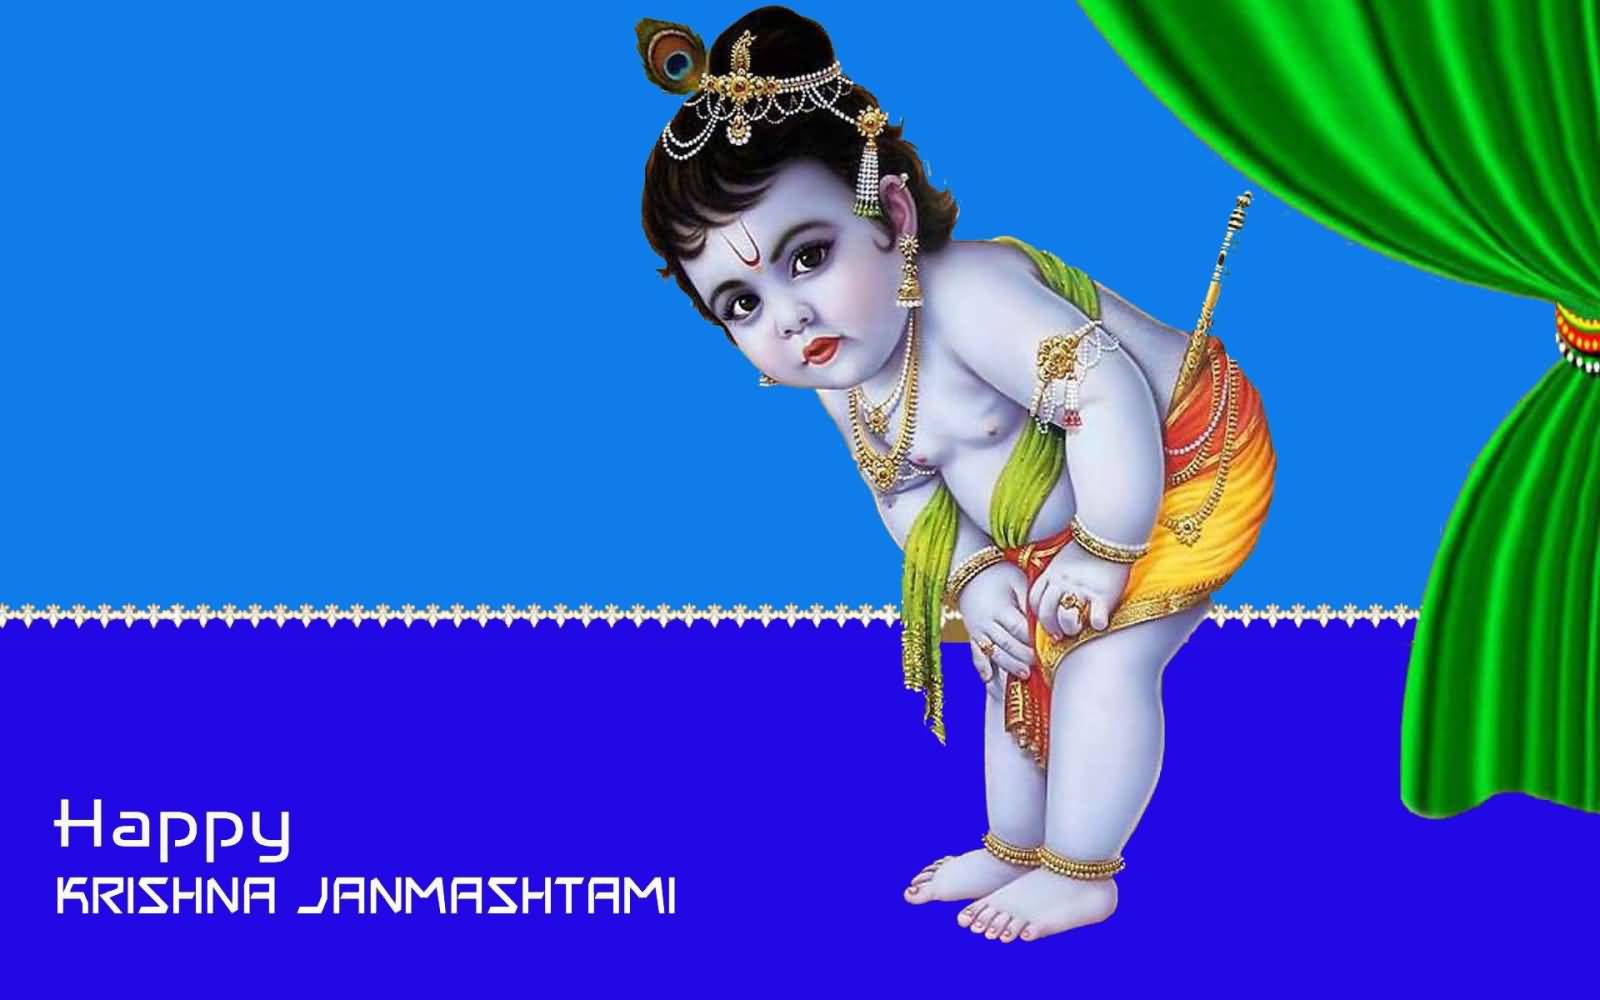 55 Latest Krishna Janmashtami Greeting Pictures